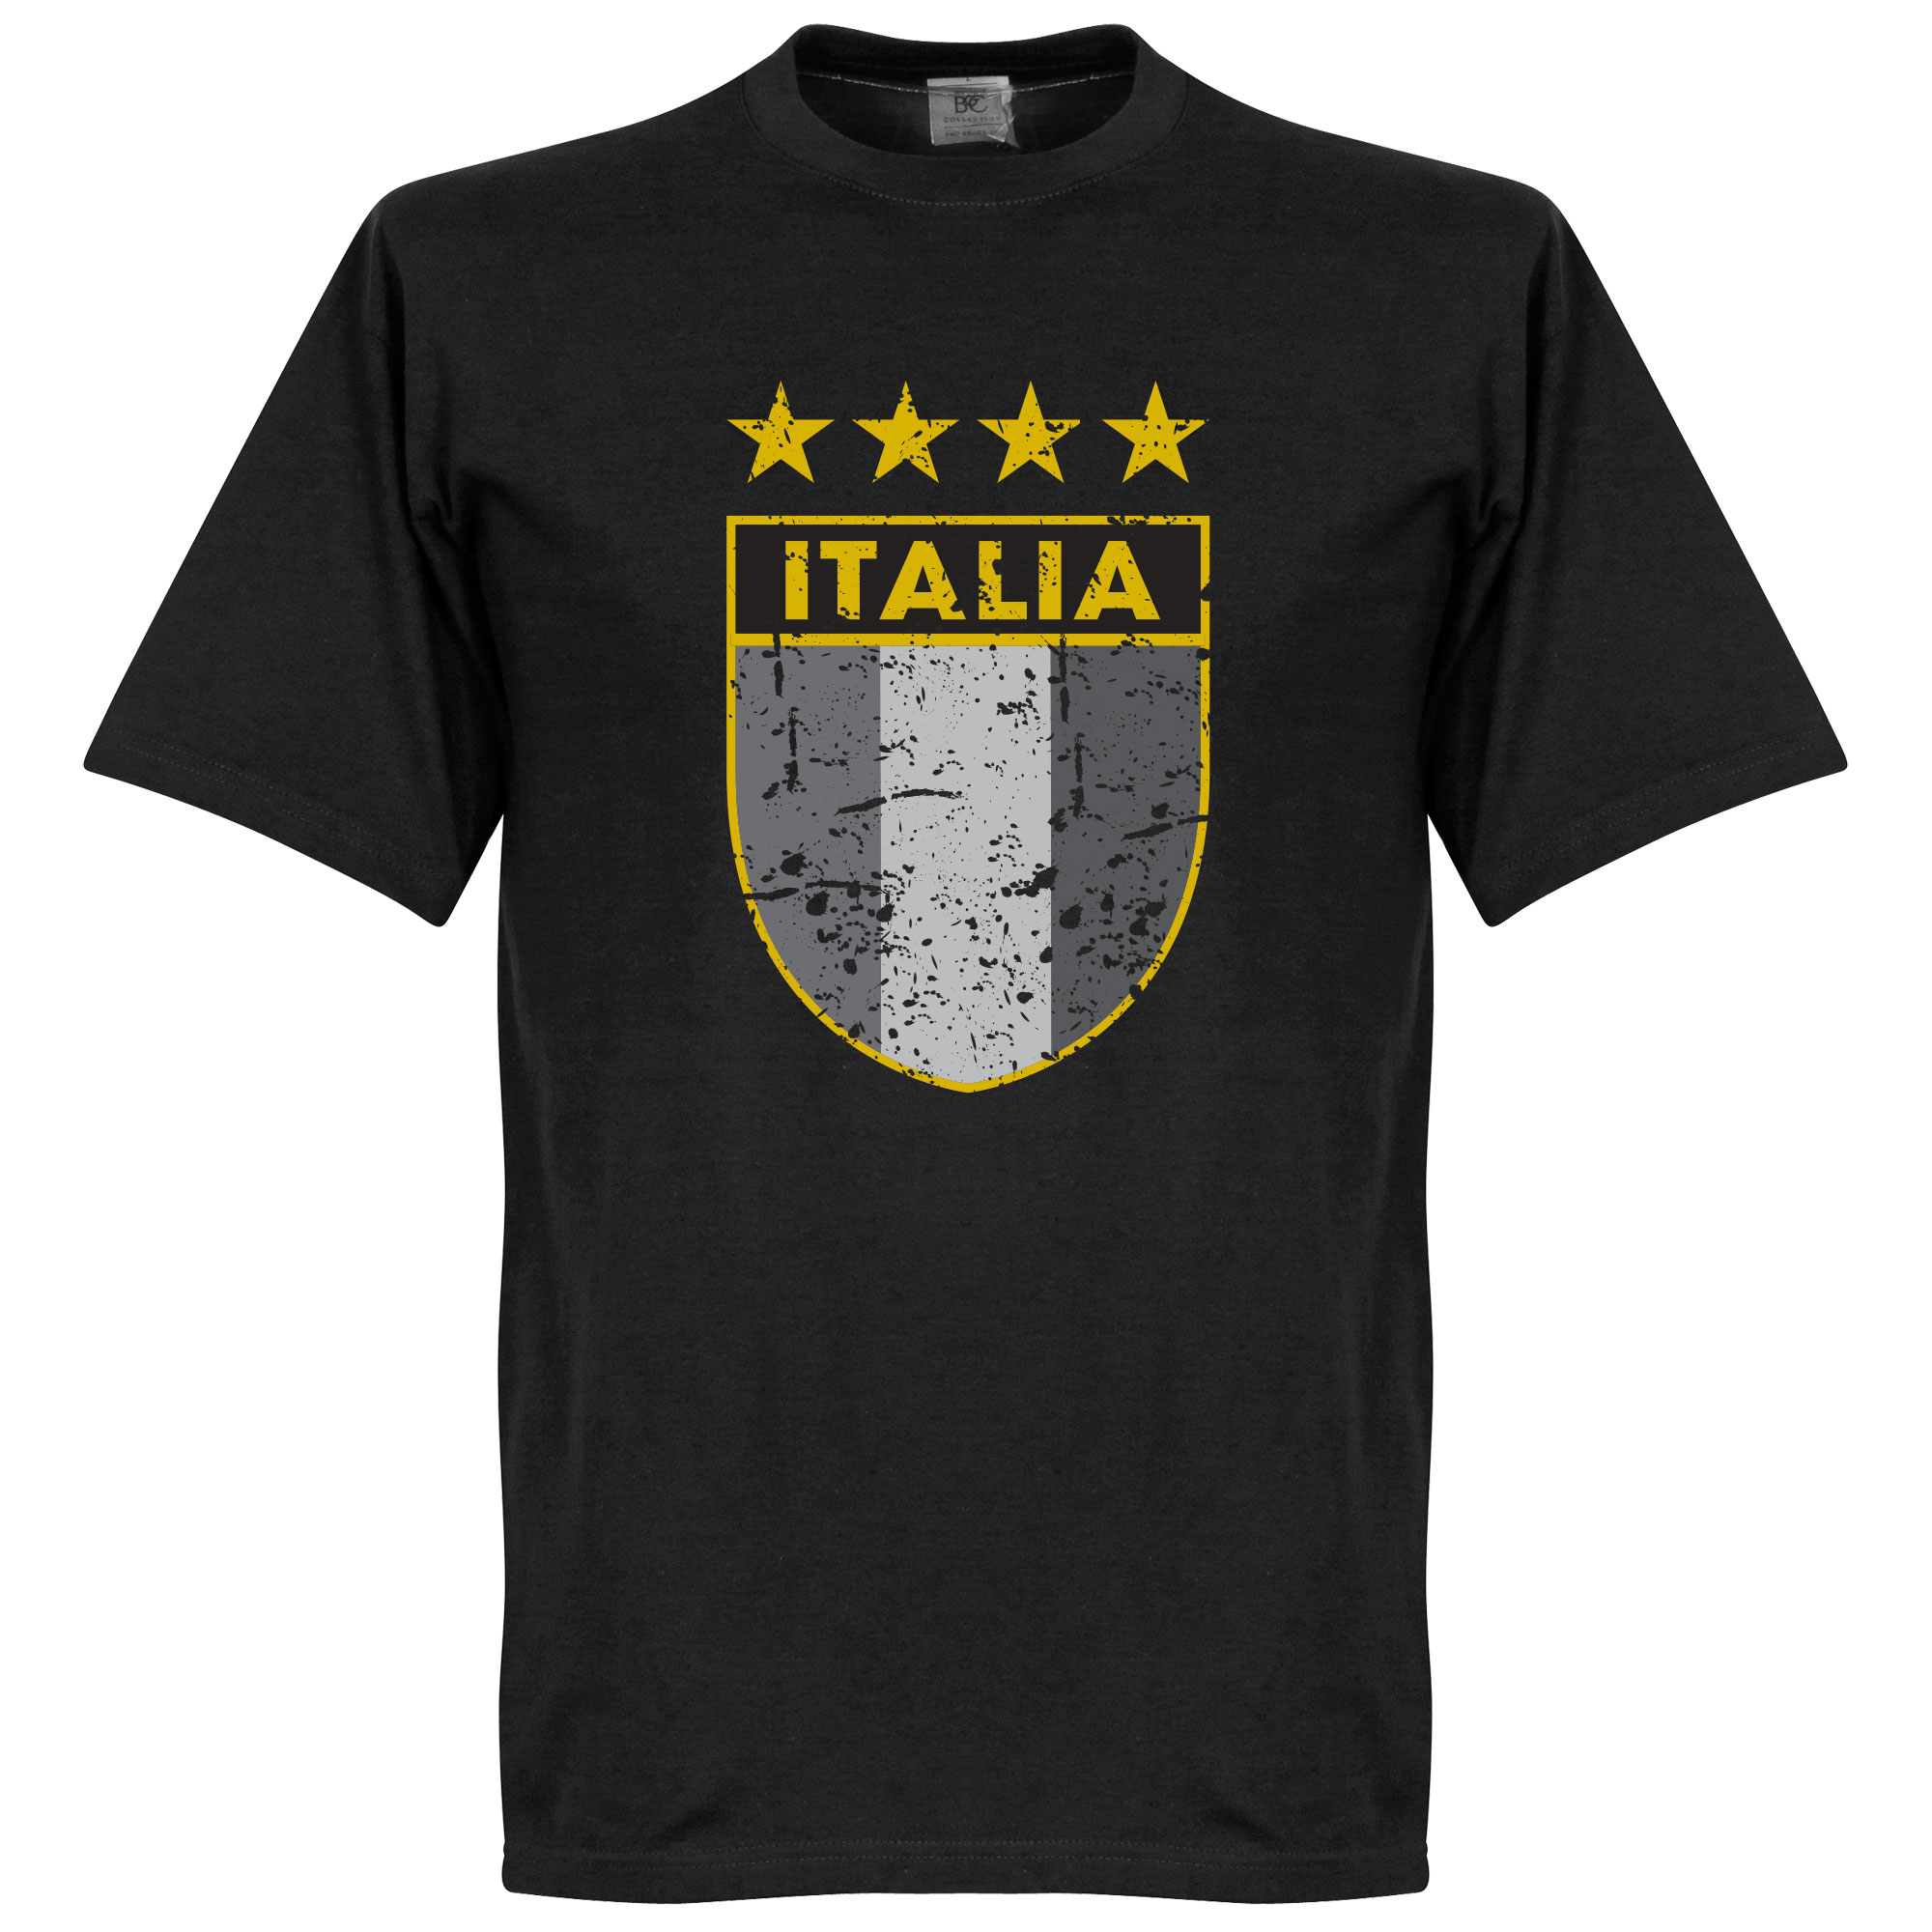 Italie Gold Star Vintage Logo T-shirt XXXXL